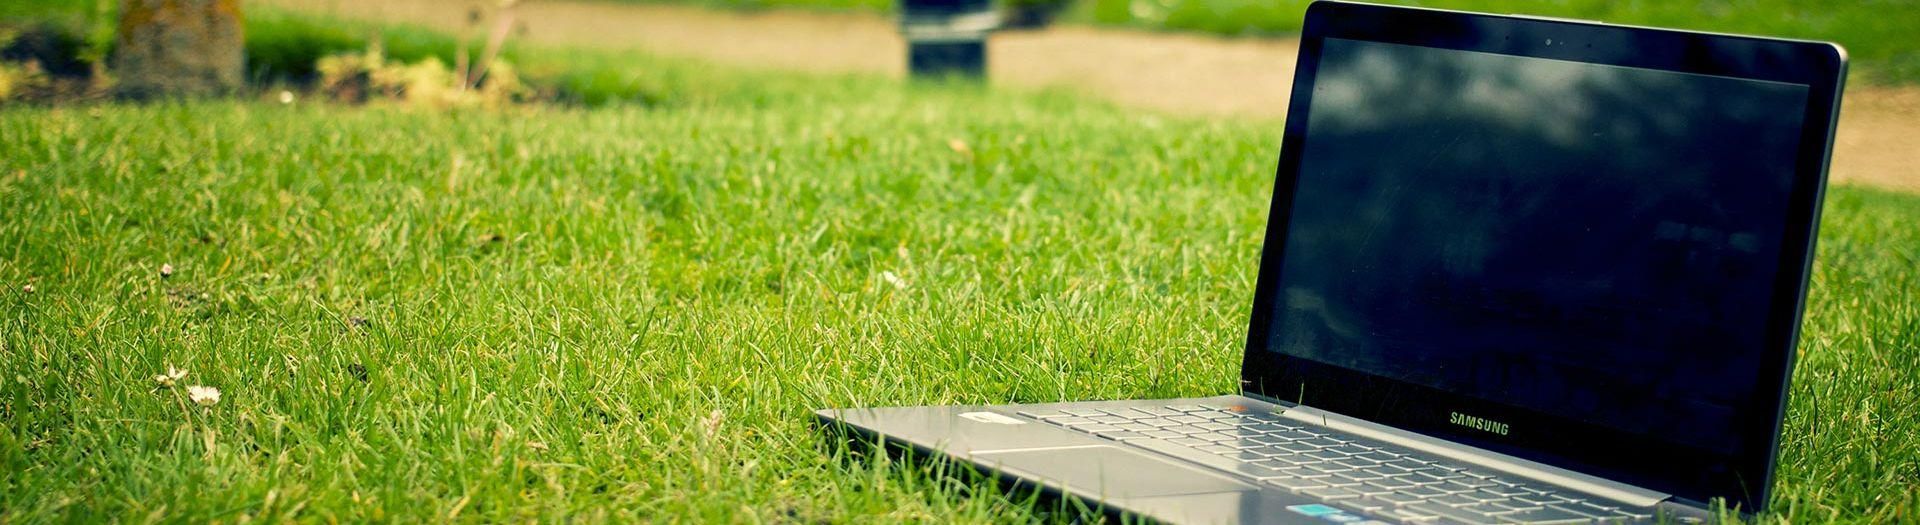 laptop-notebook-grass-meadow-9b558d75 Hardware | BRIGHT Software B.V.